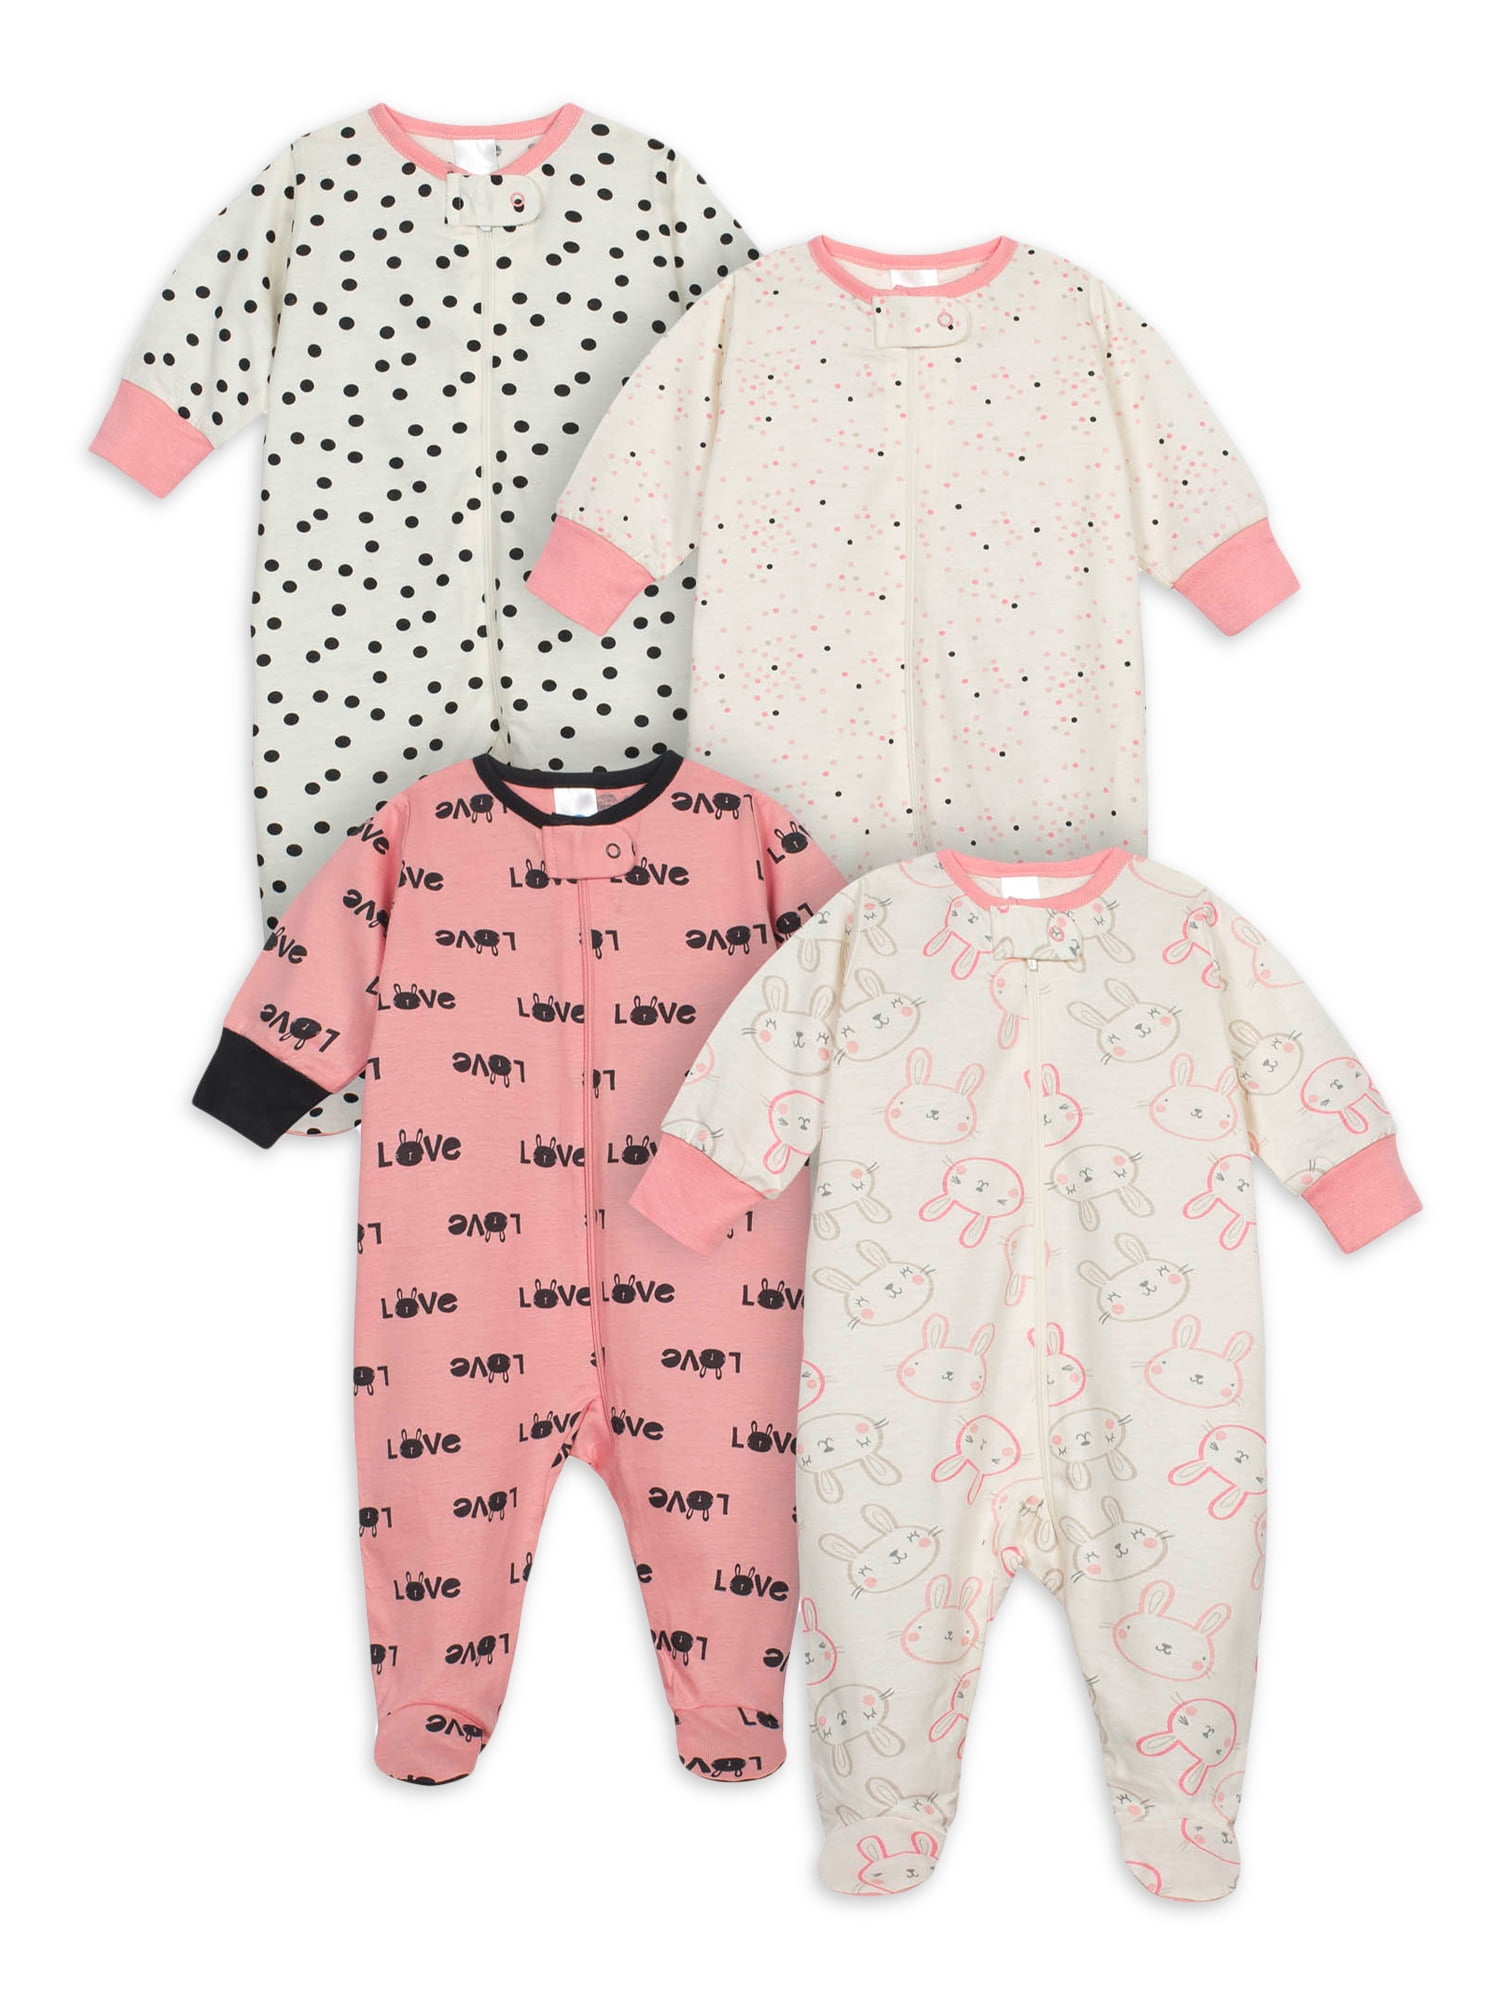 Asher & Olivia Pajamas for Girls 4 Pc Cotton Pj Set for Baby Toddler Little Kid 